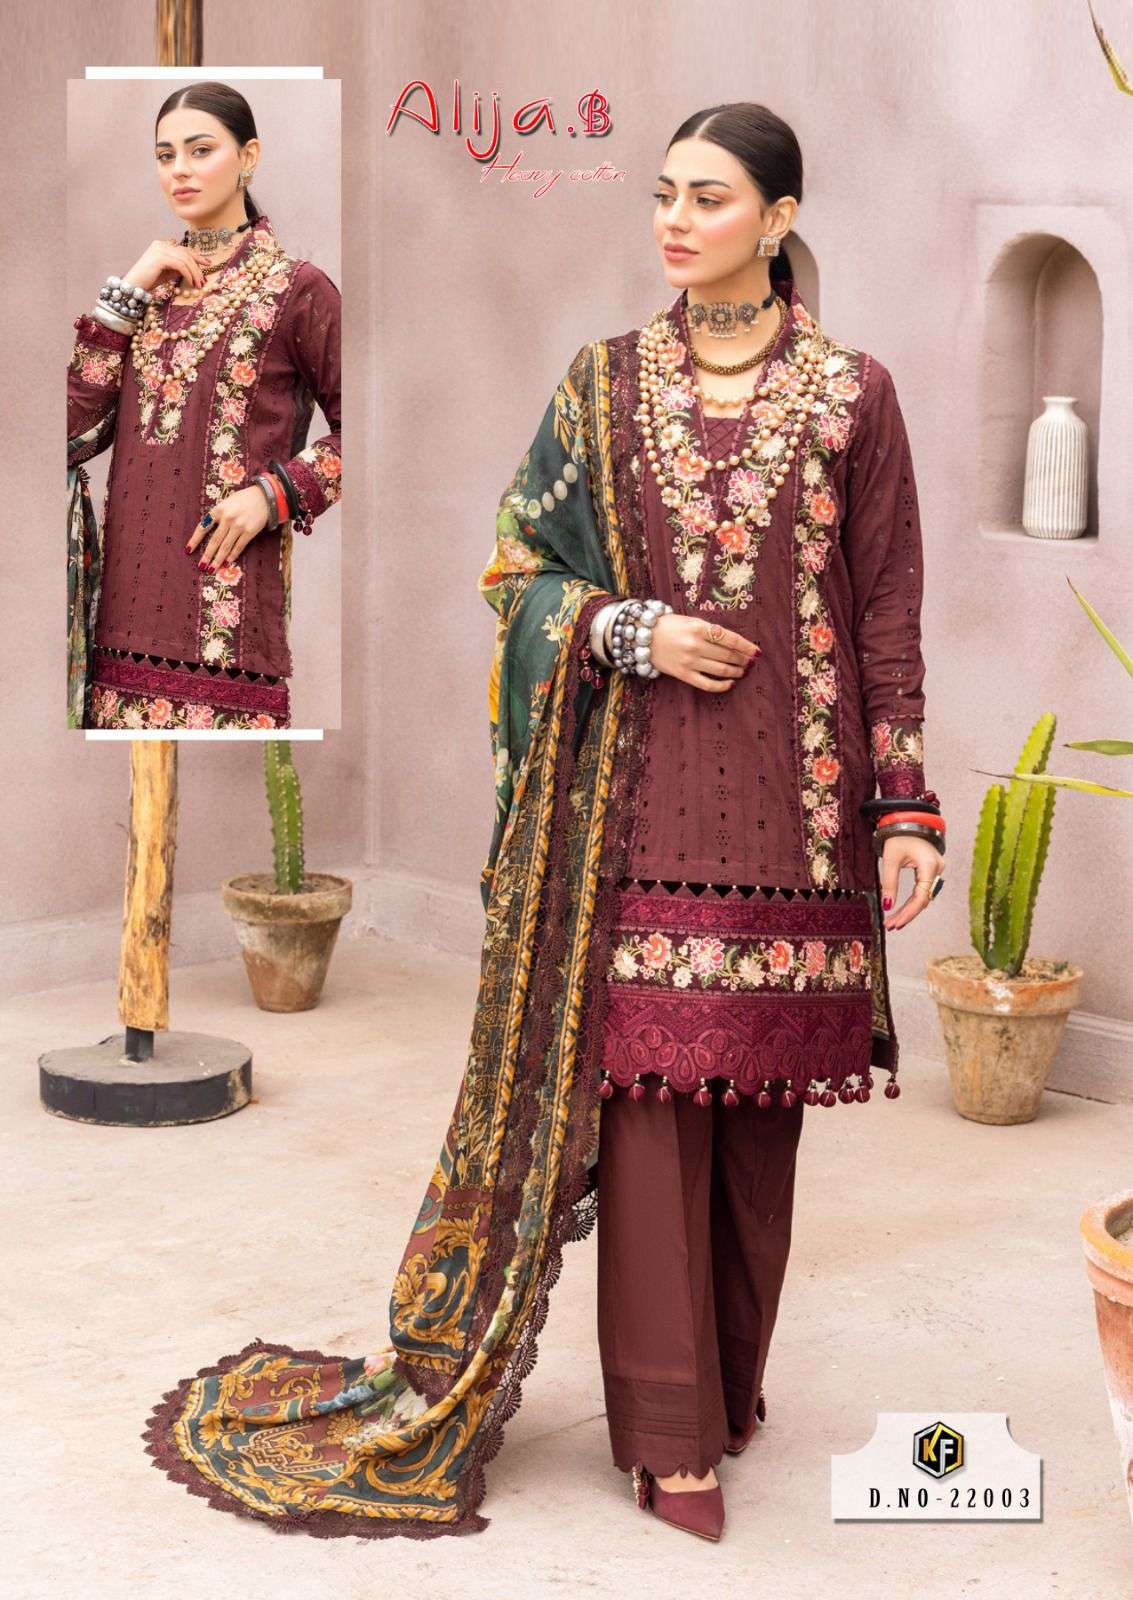 keval fab alija b vol 22 22001-22006 series exclusive heavy cotton designer karchi pakistani suits 